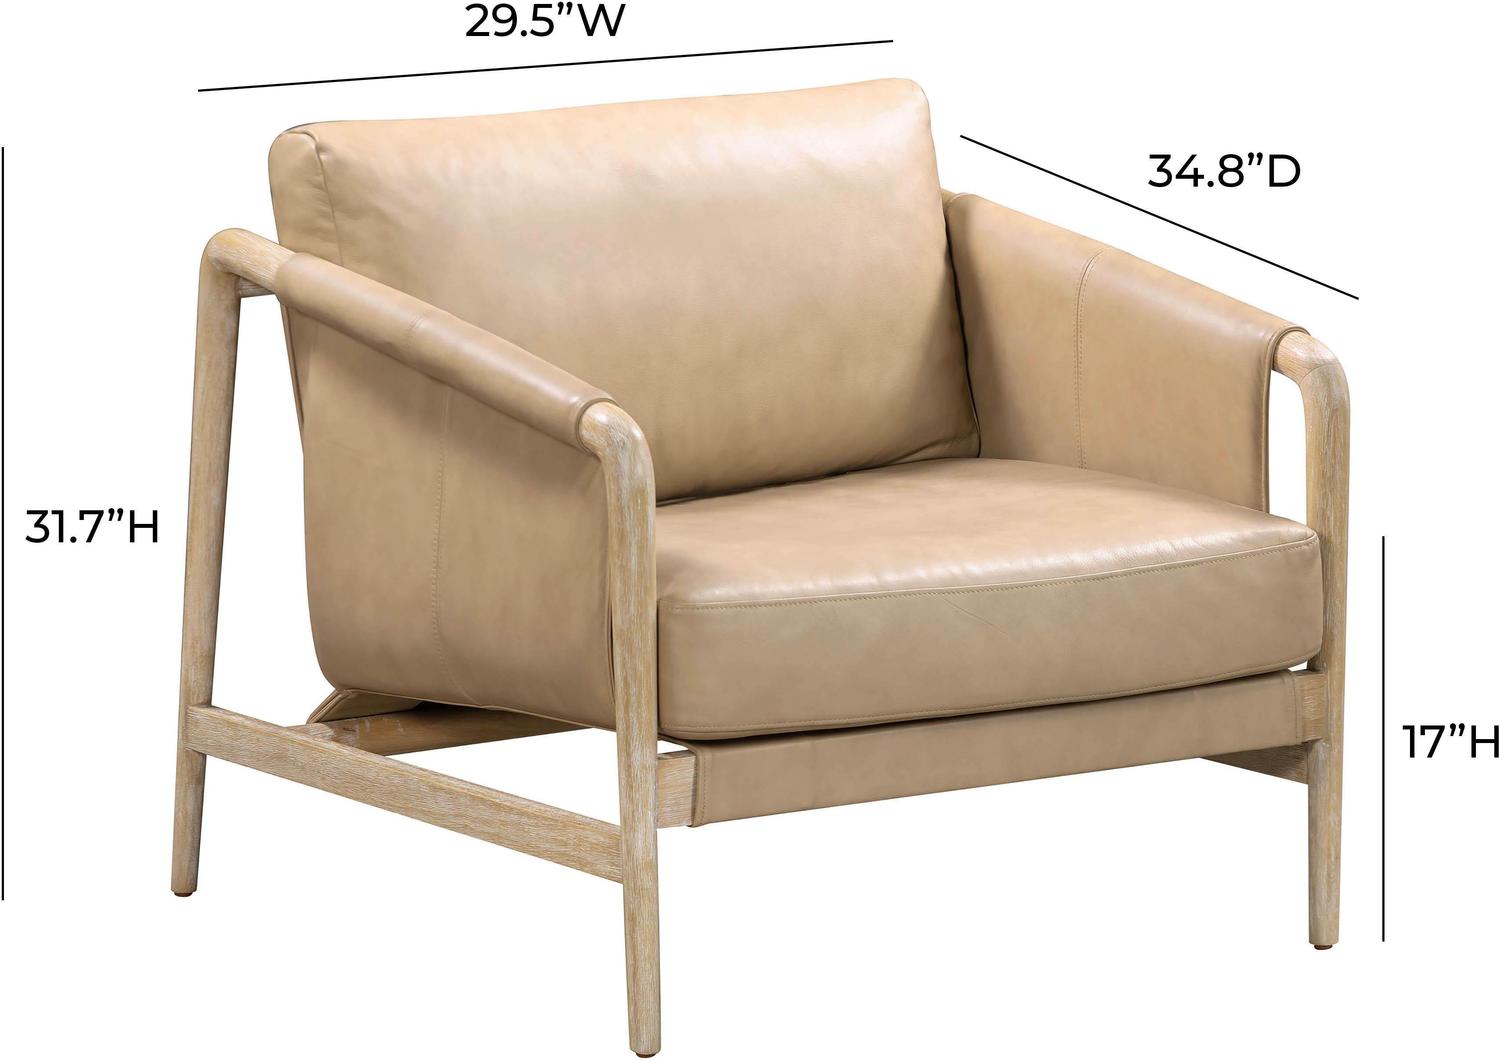 cream velvet chair Tov Furniture Accent Chairs Tan,White